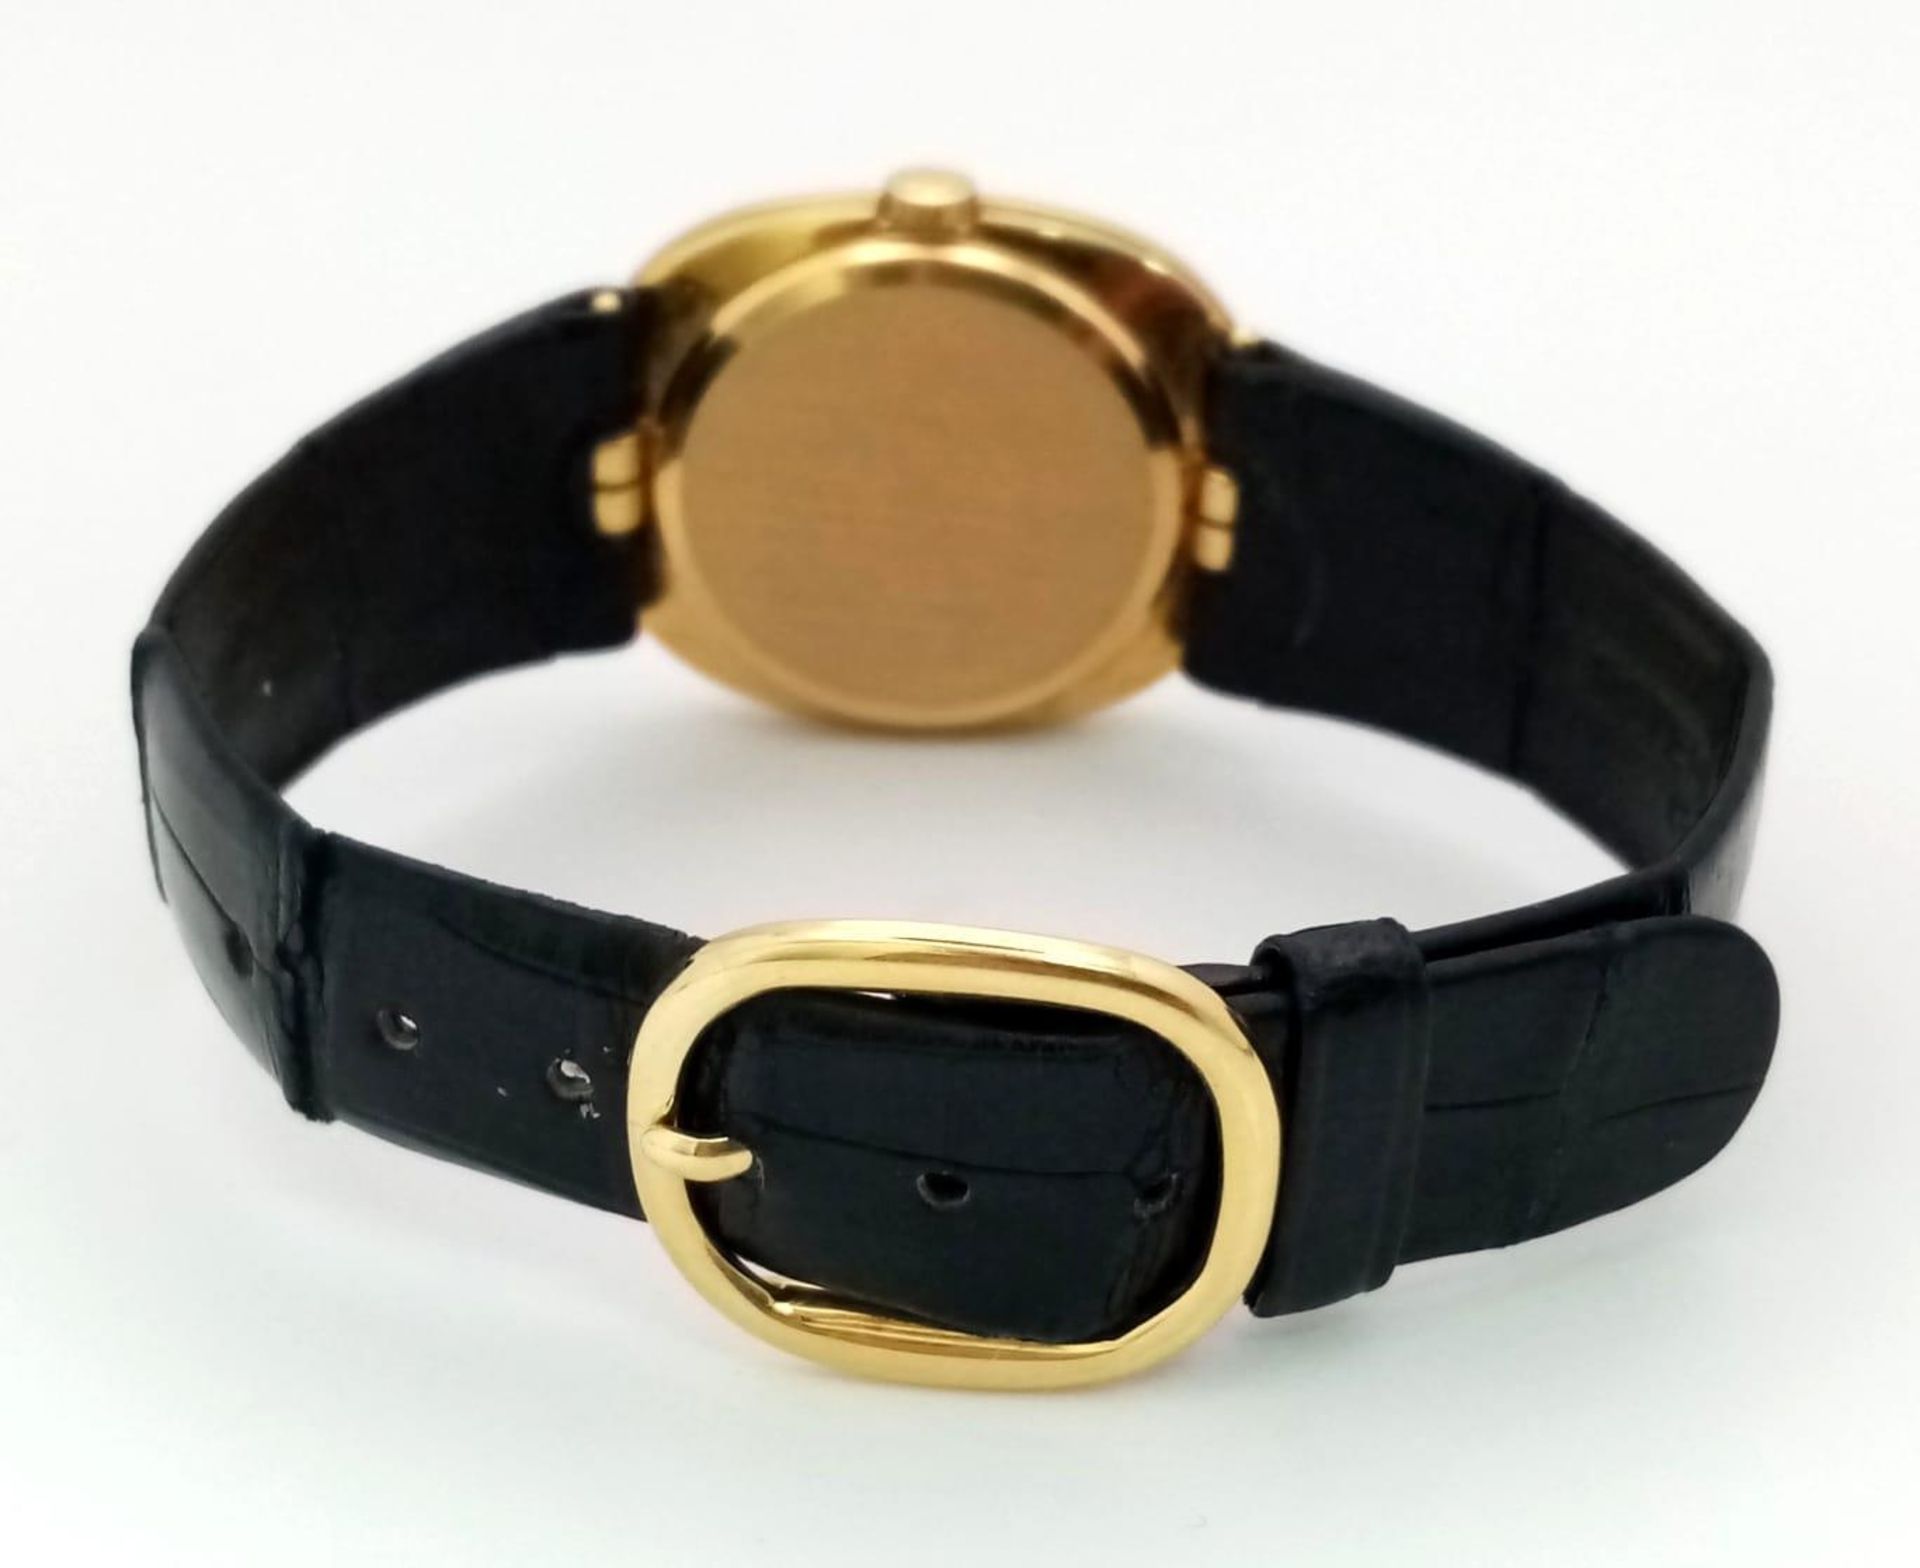 A Vintage Patek Phillipe 18K Gold Gents Watch. Original black leather strap with 18k gold buckle. - Image 5 of 8